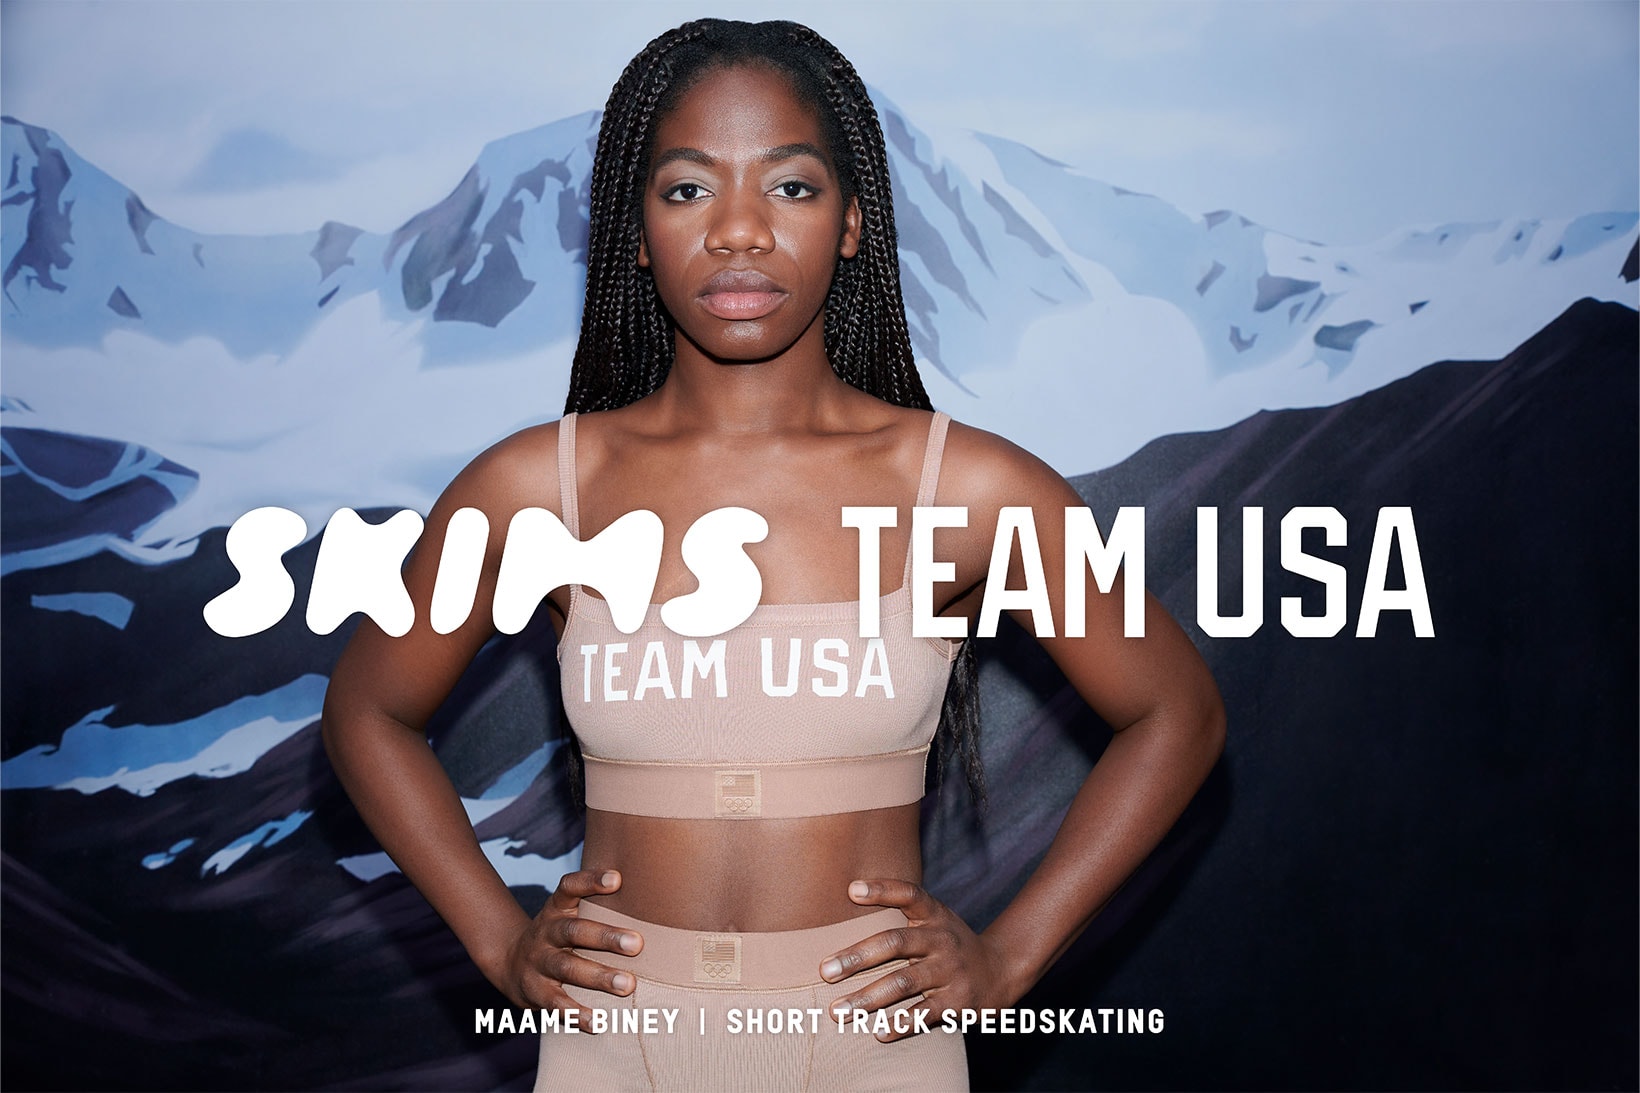 SKIMS Team USA 2022 Winter Olympics Paralympics Kim Kardashian Maame Biney Short Track Speedskater